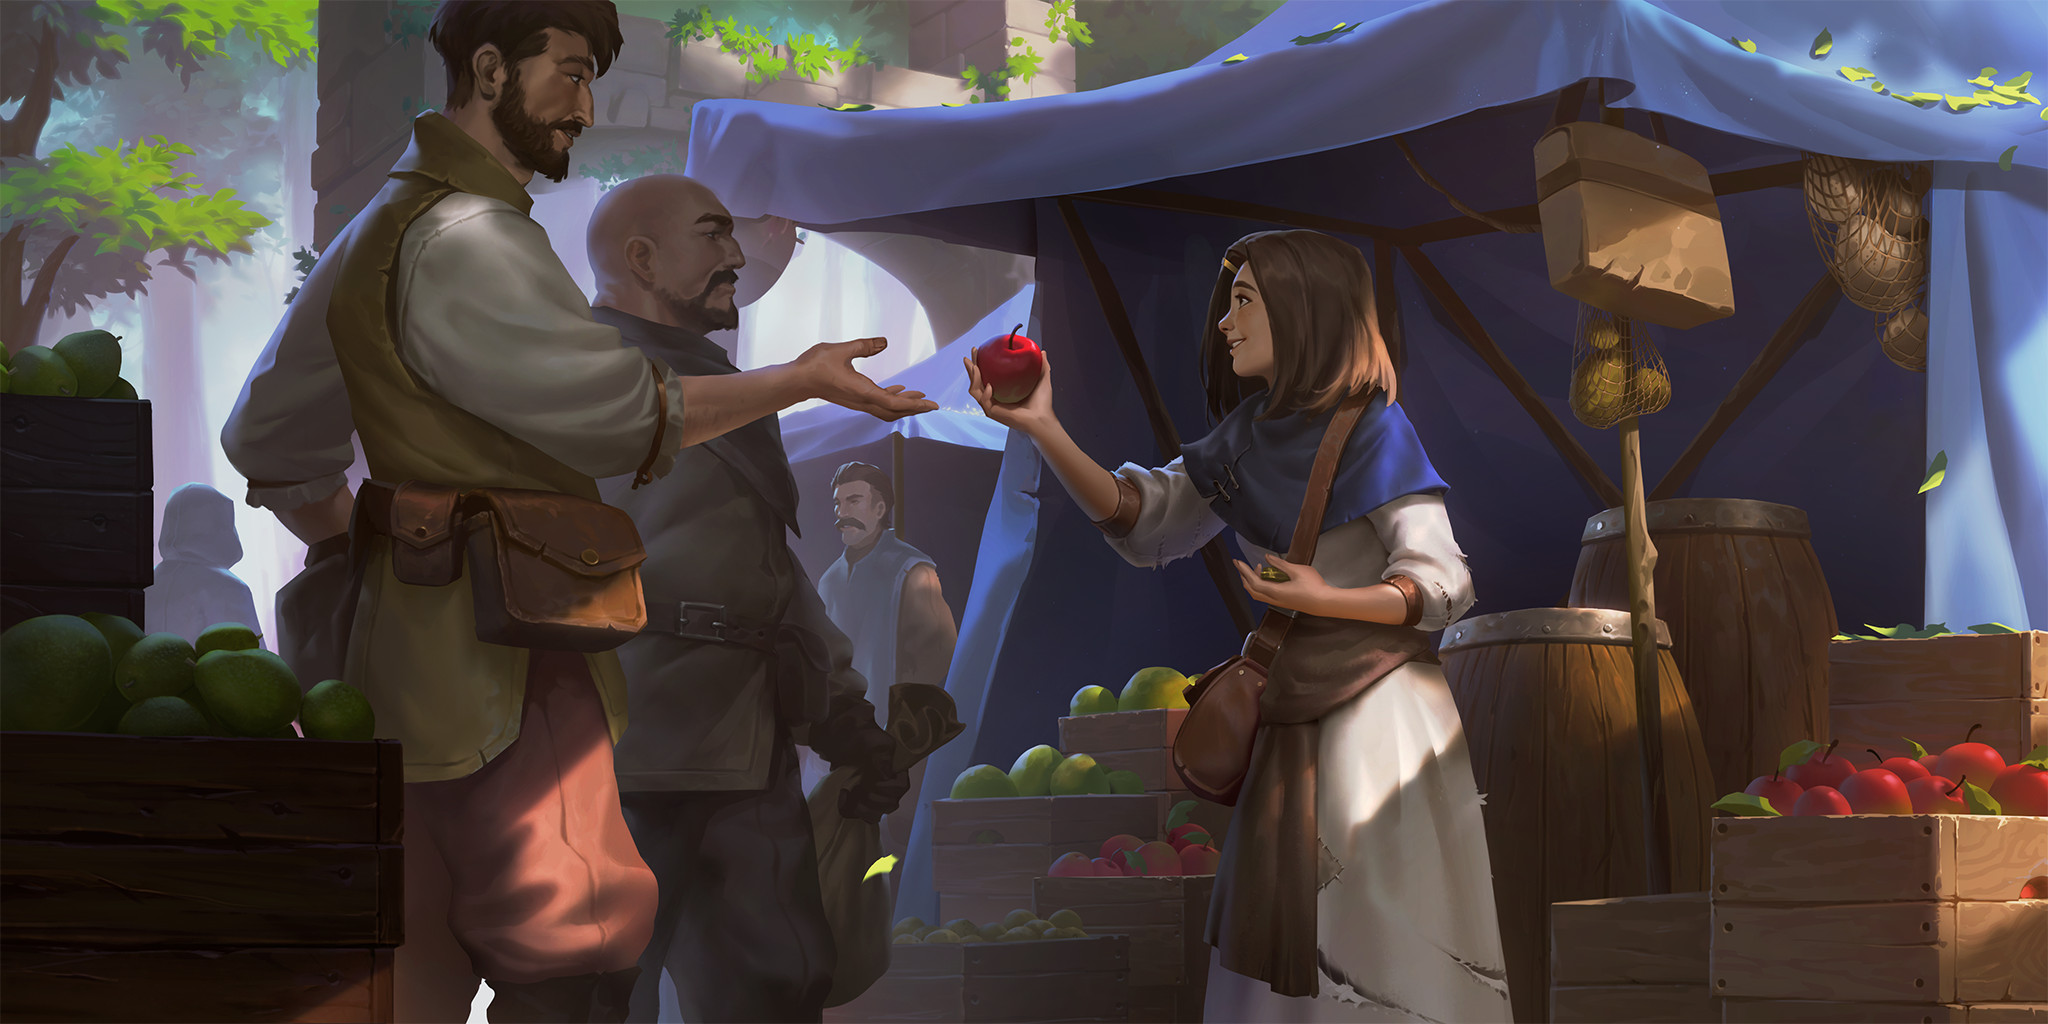 General 2048x1024 fantasy girl fantasy city Legends of Runeterra fruit Market Town apples video games video game art